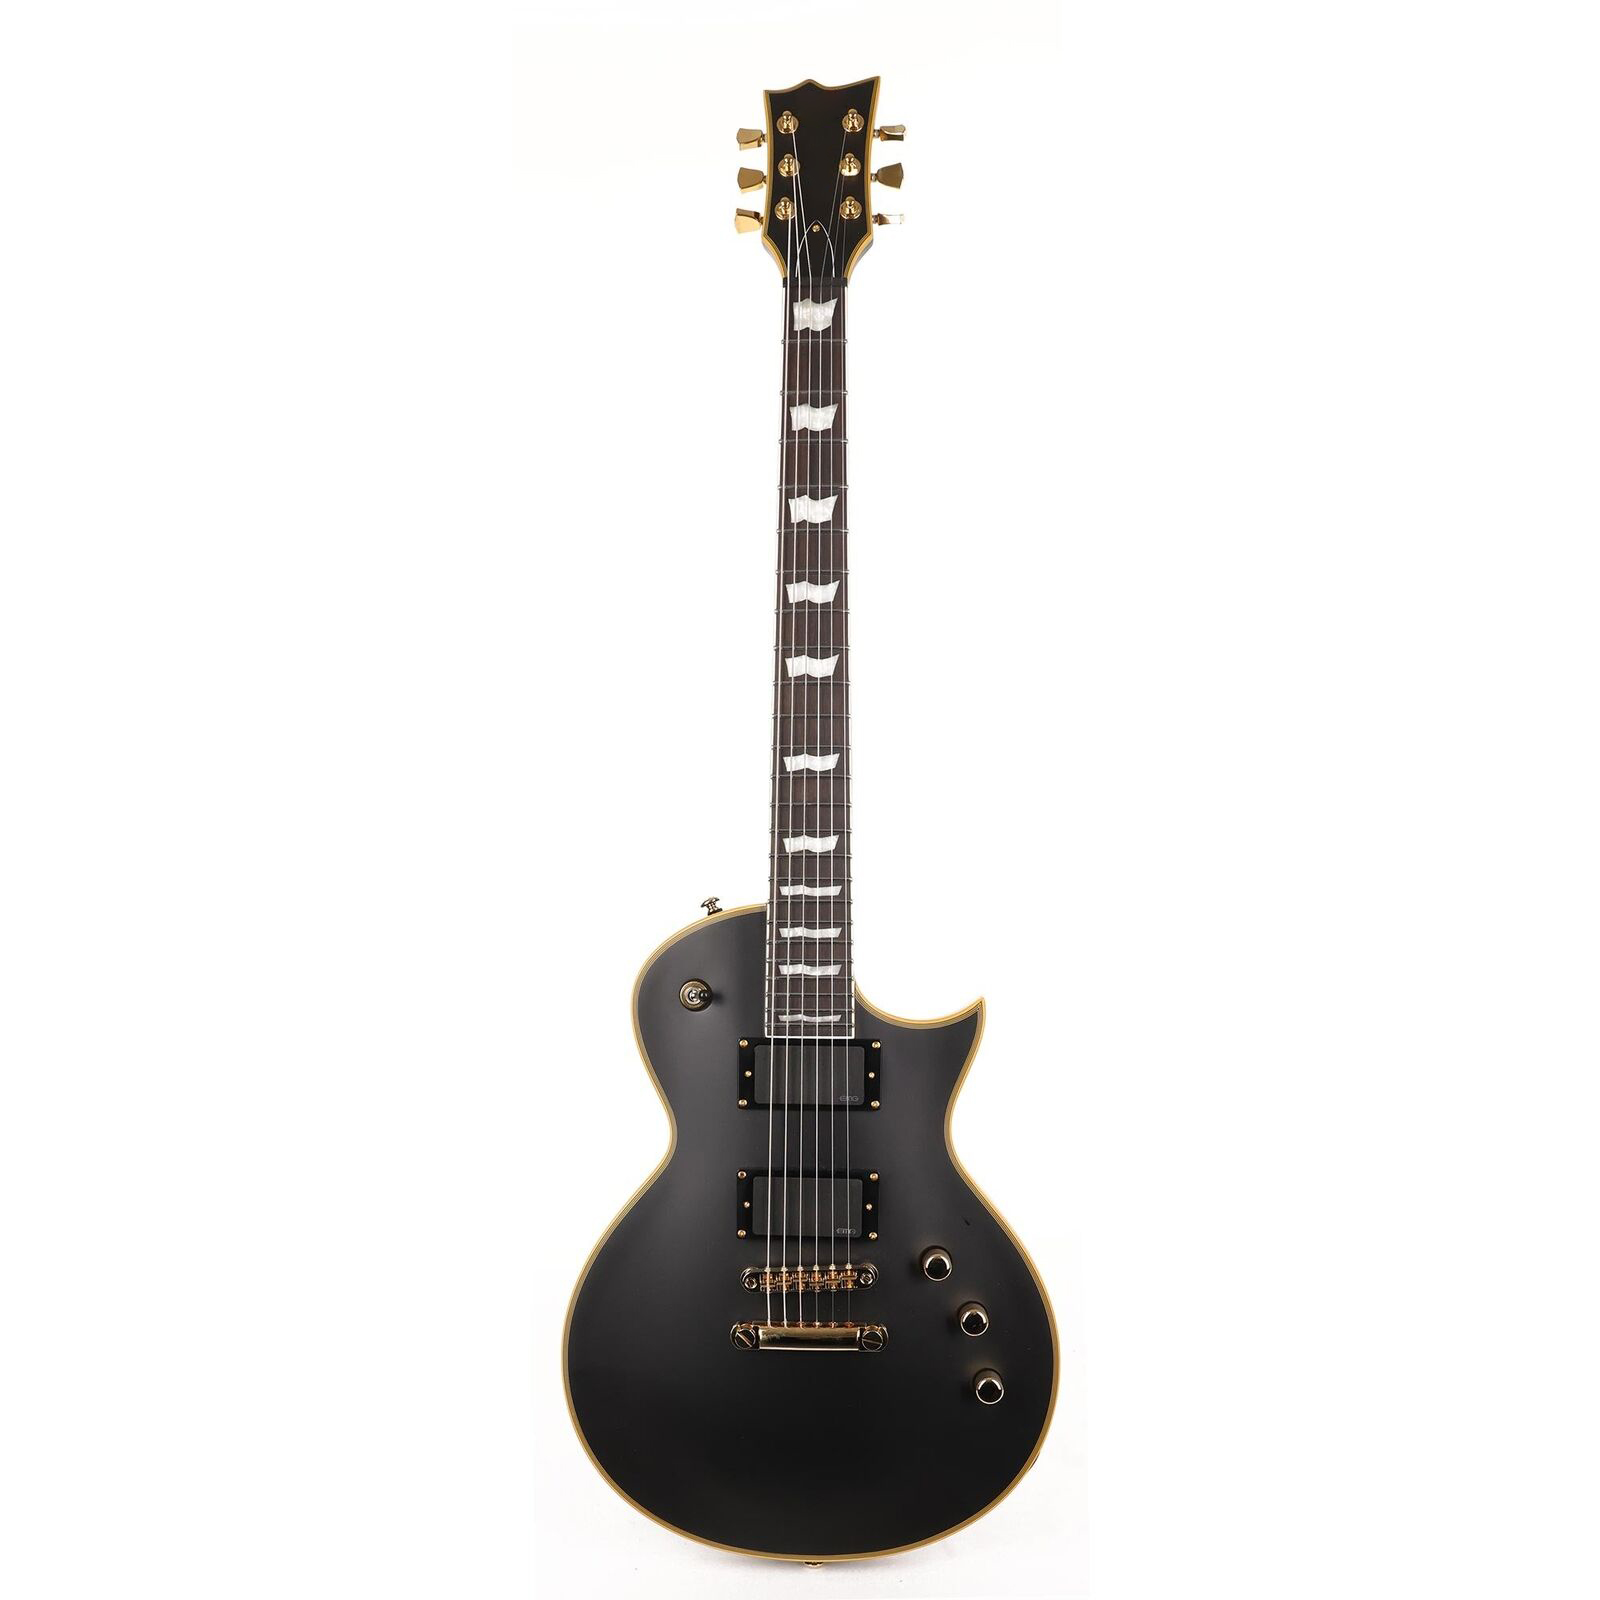 E S P LTD EC-1000 Vintage Black Electric Guitar as same of the pictures